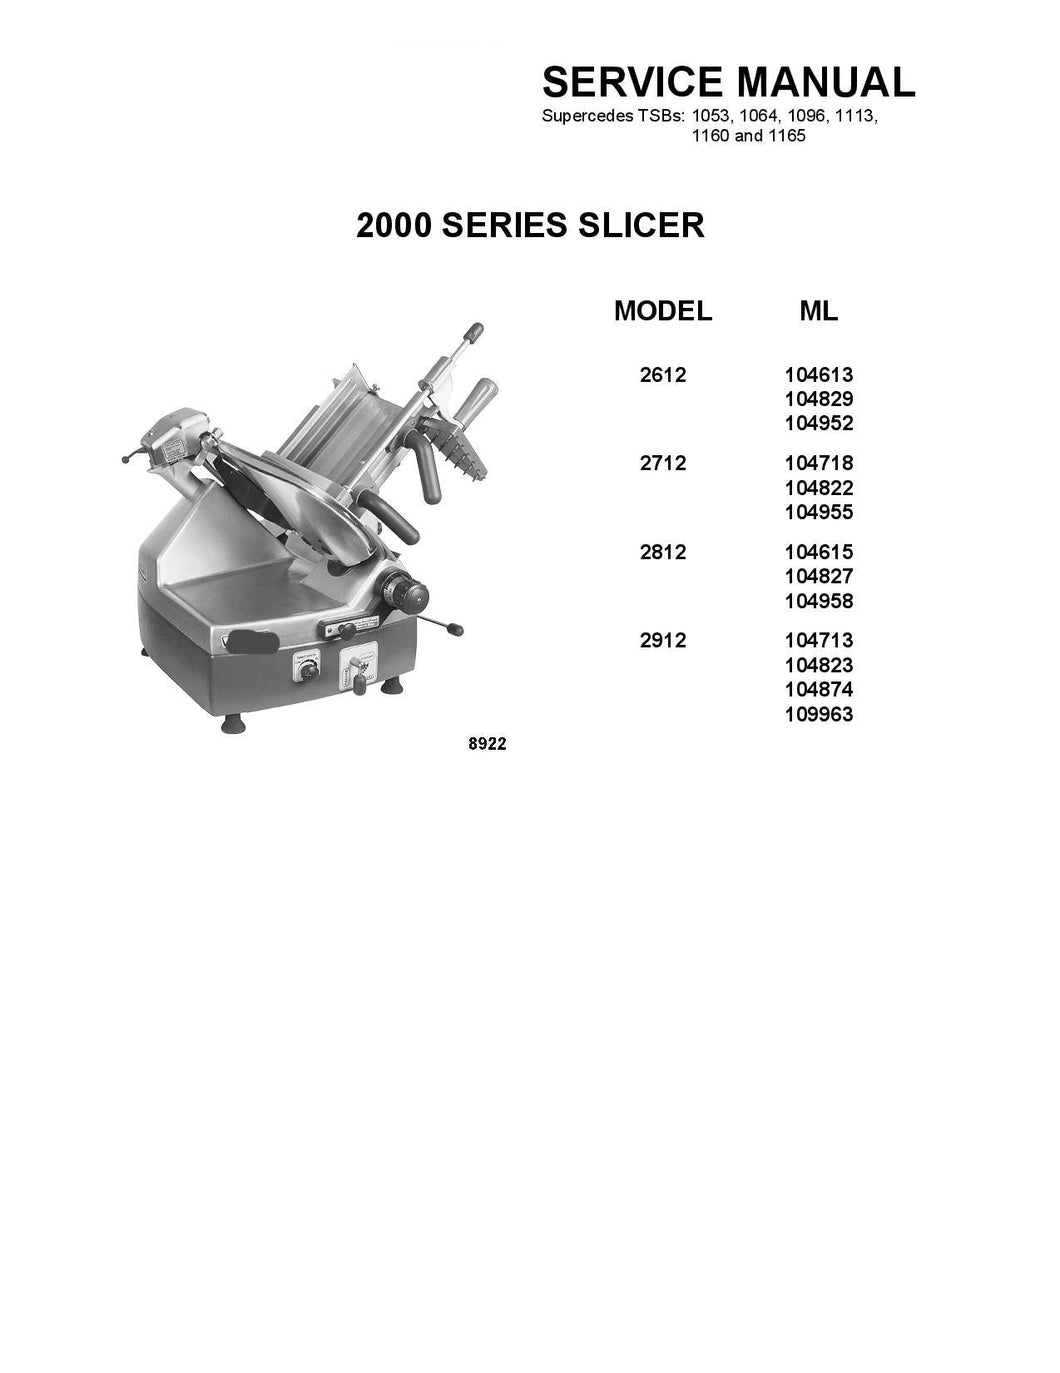 HOBART MODEL 2612, 2712, 2812, 2912 SLICER SERVICE, TECHNICAL AND REPAIR MANUALS PDF